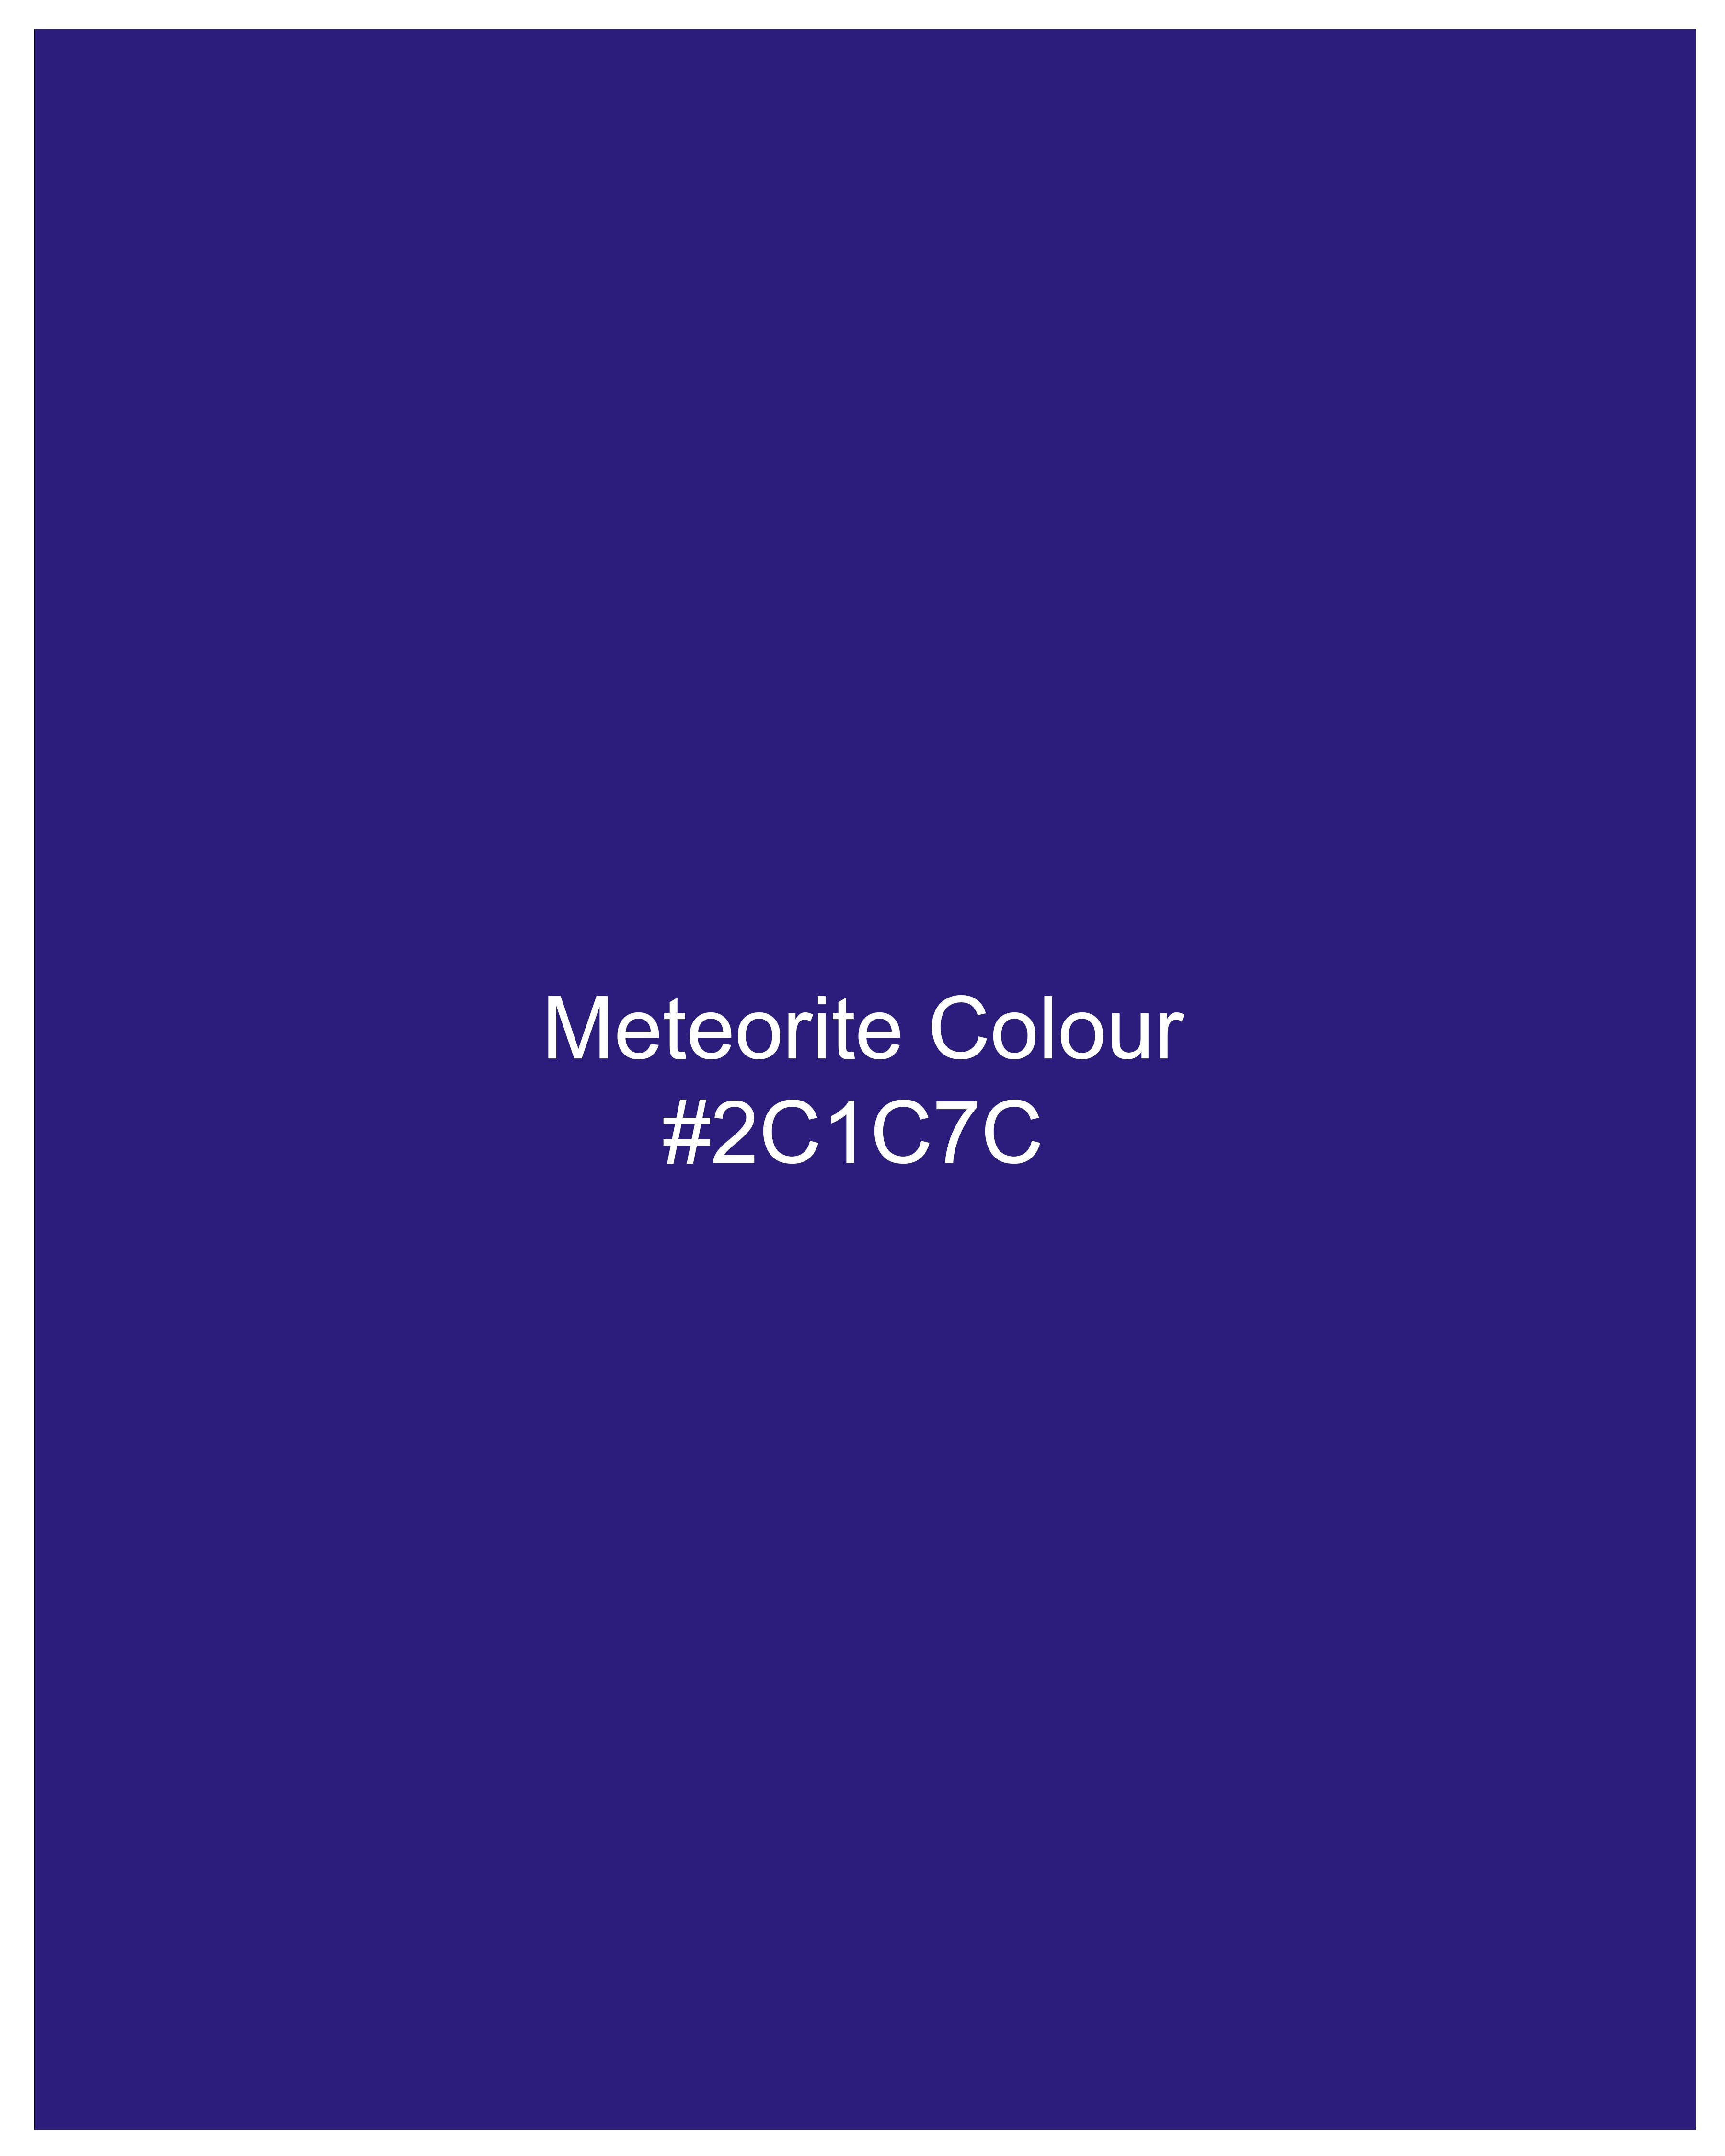 Meteorite Dark Blue Super Soft Premium Cotton Shirt 9929-CA-38, 9929-CA-H-38, 9929-CA-39, 9929-CA-H-39, 9929-CA-40, 9929-CA-H-40, 9929-CA-42, 9929-CA-H-42, 9929-CA-44, 9929-CA-H-44, 9929-CA-46, 9929-CA-H-46, 9929-CA-48, 9929-CA-H-48, 9929-CA-50, 9929-CA-H-50, 9929-CA-52, 9929-CA-H-52